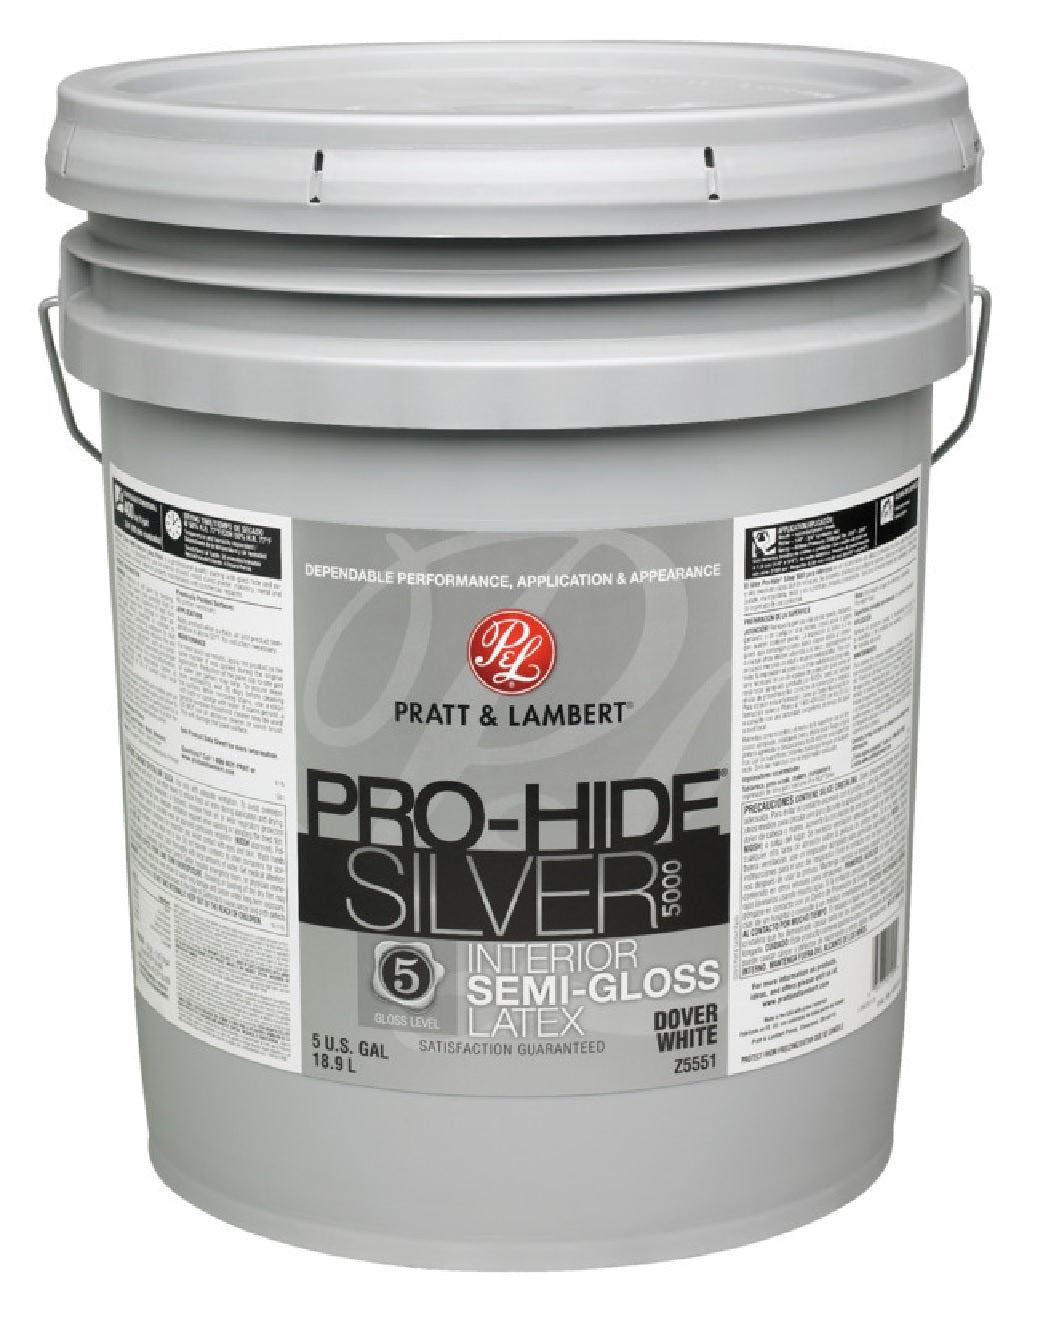 Pratt & Lambert 0000Z5551-20 Pro-Hide Silver Semi-Gloss Latex Interior Paint, Dower White